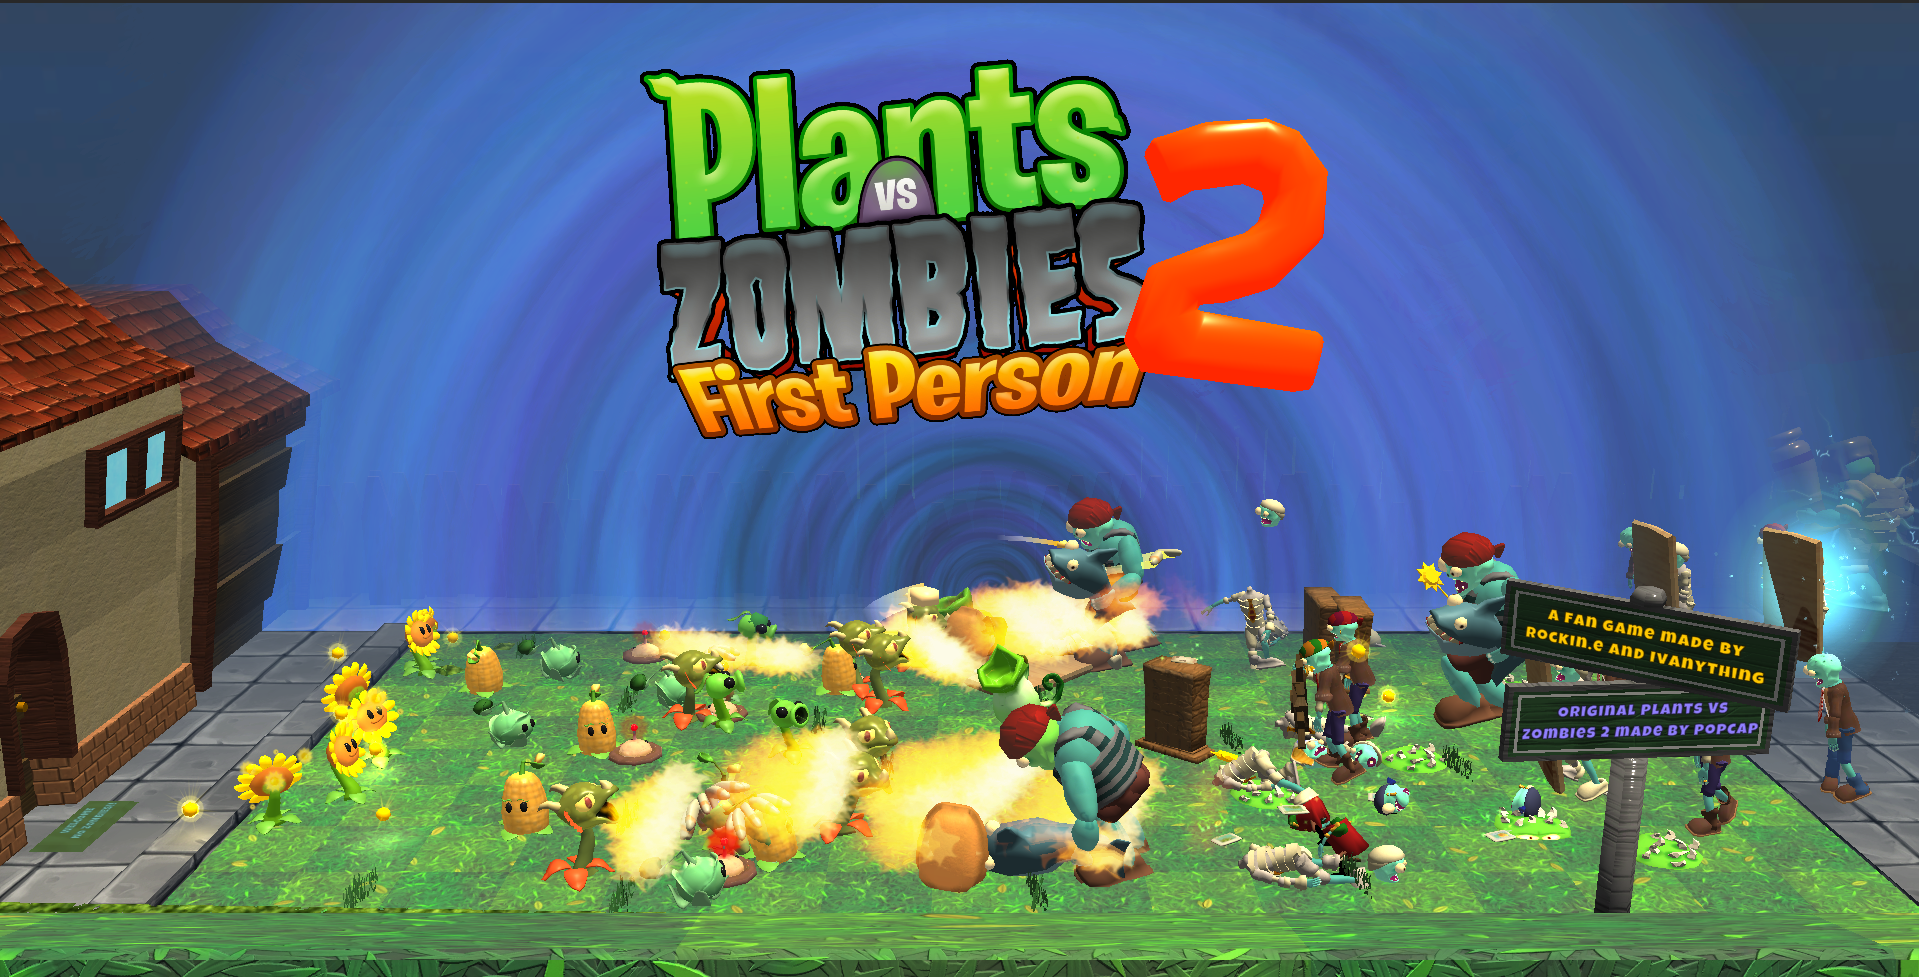 F] Plants vs. Zombies Online - PvP 